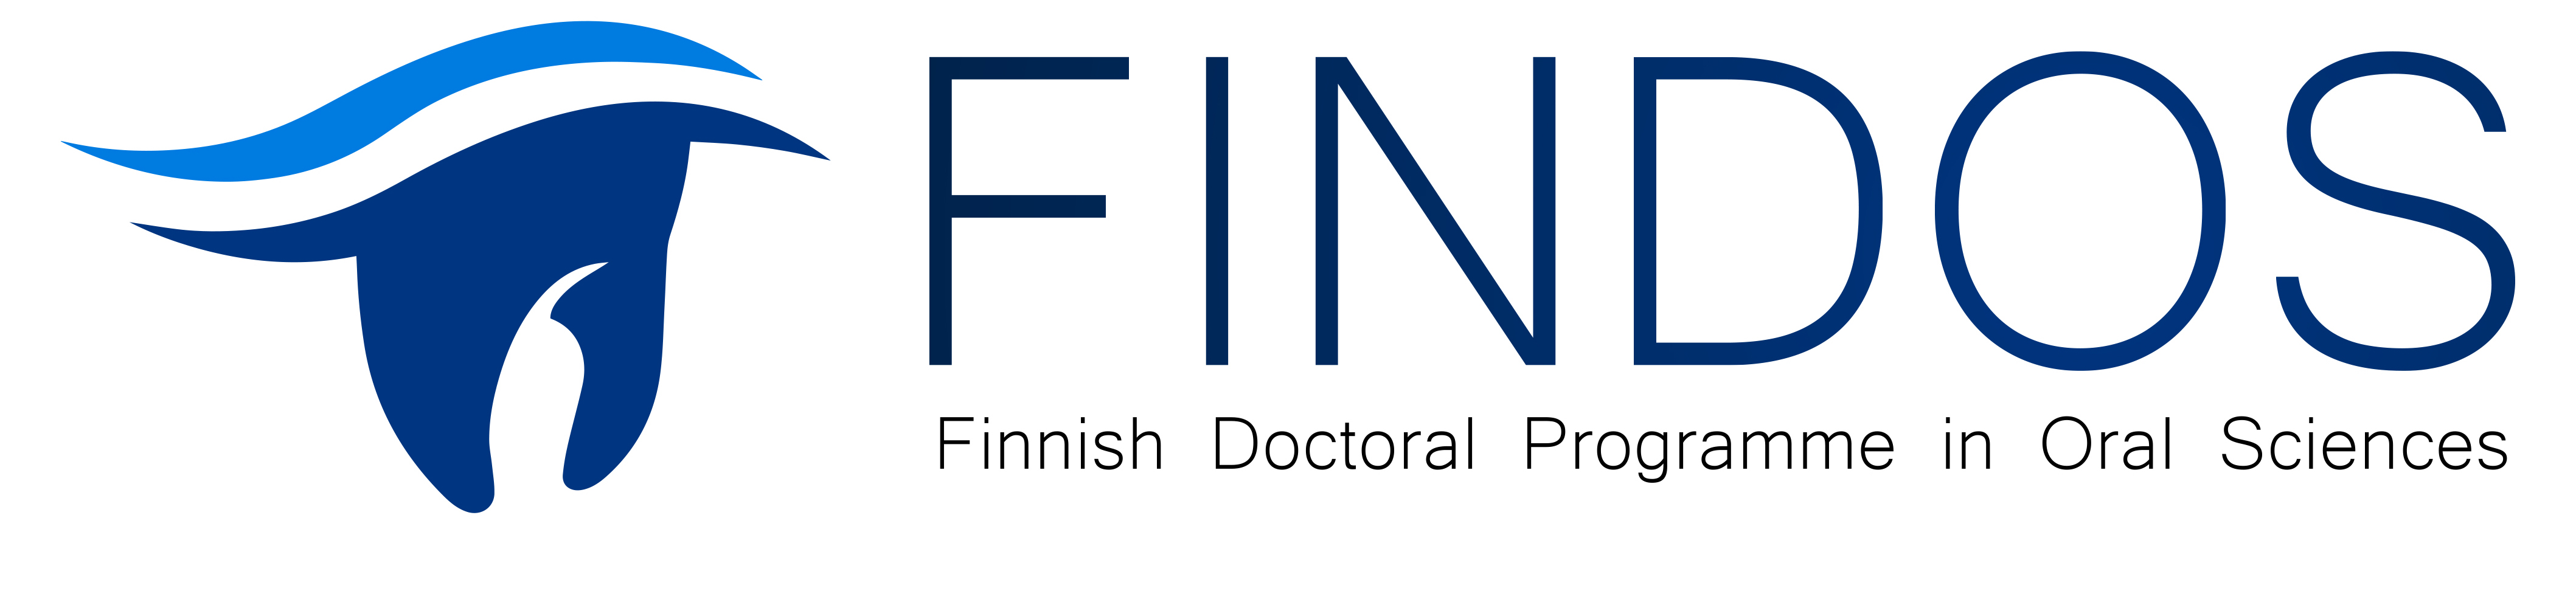 FINDOS logo